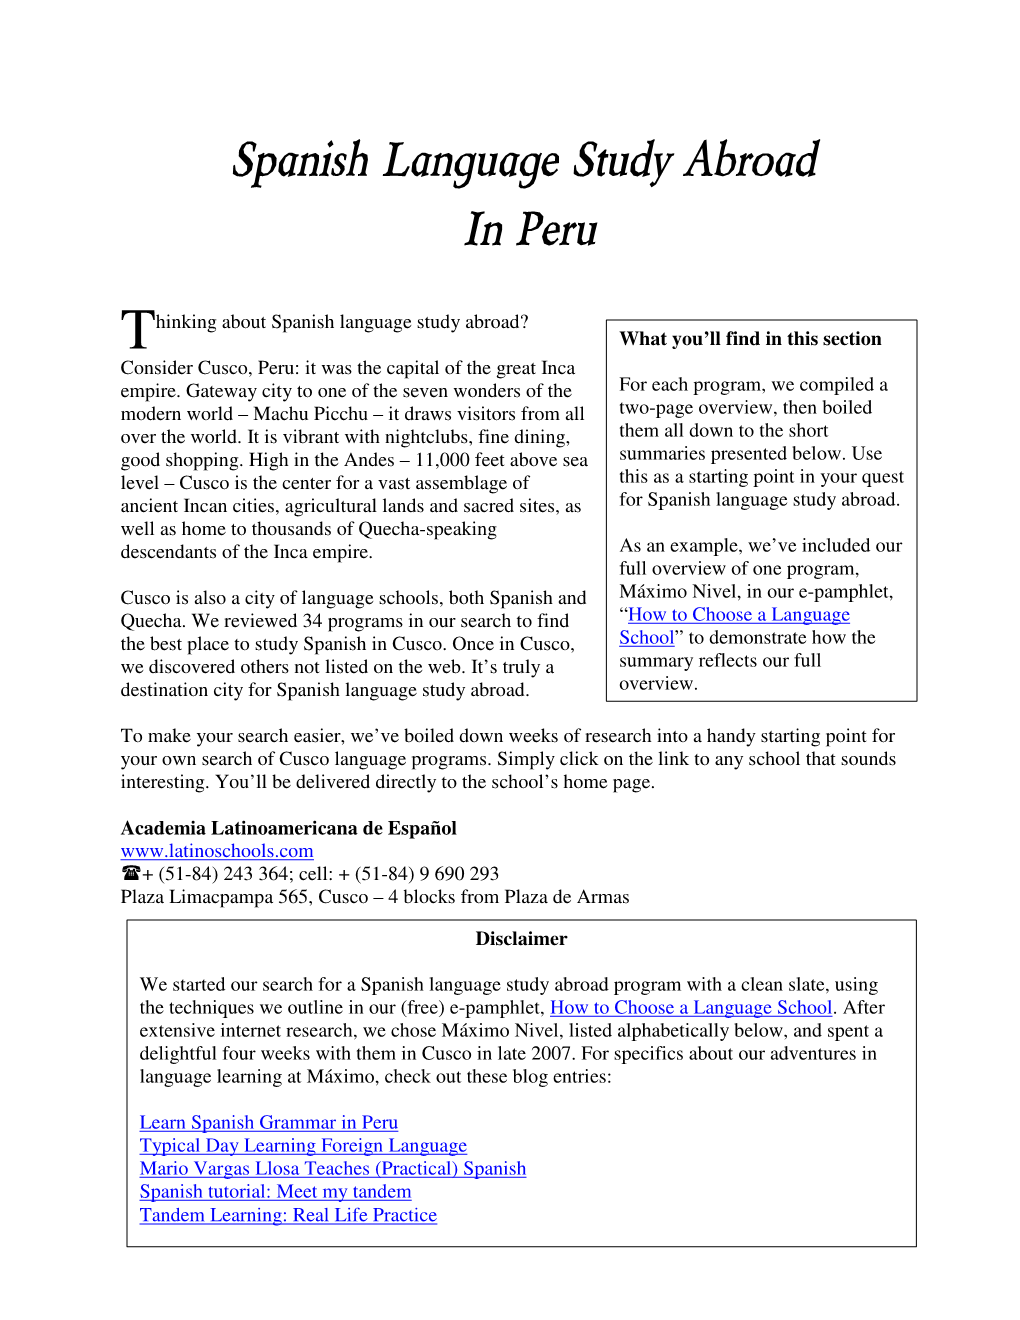 Spanish Language Study Abroad in Peru